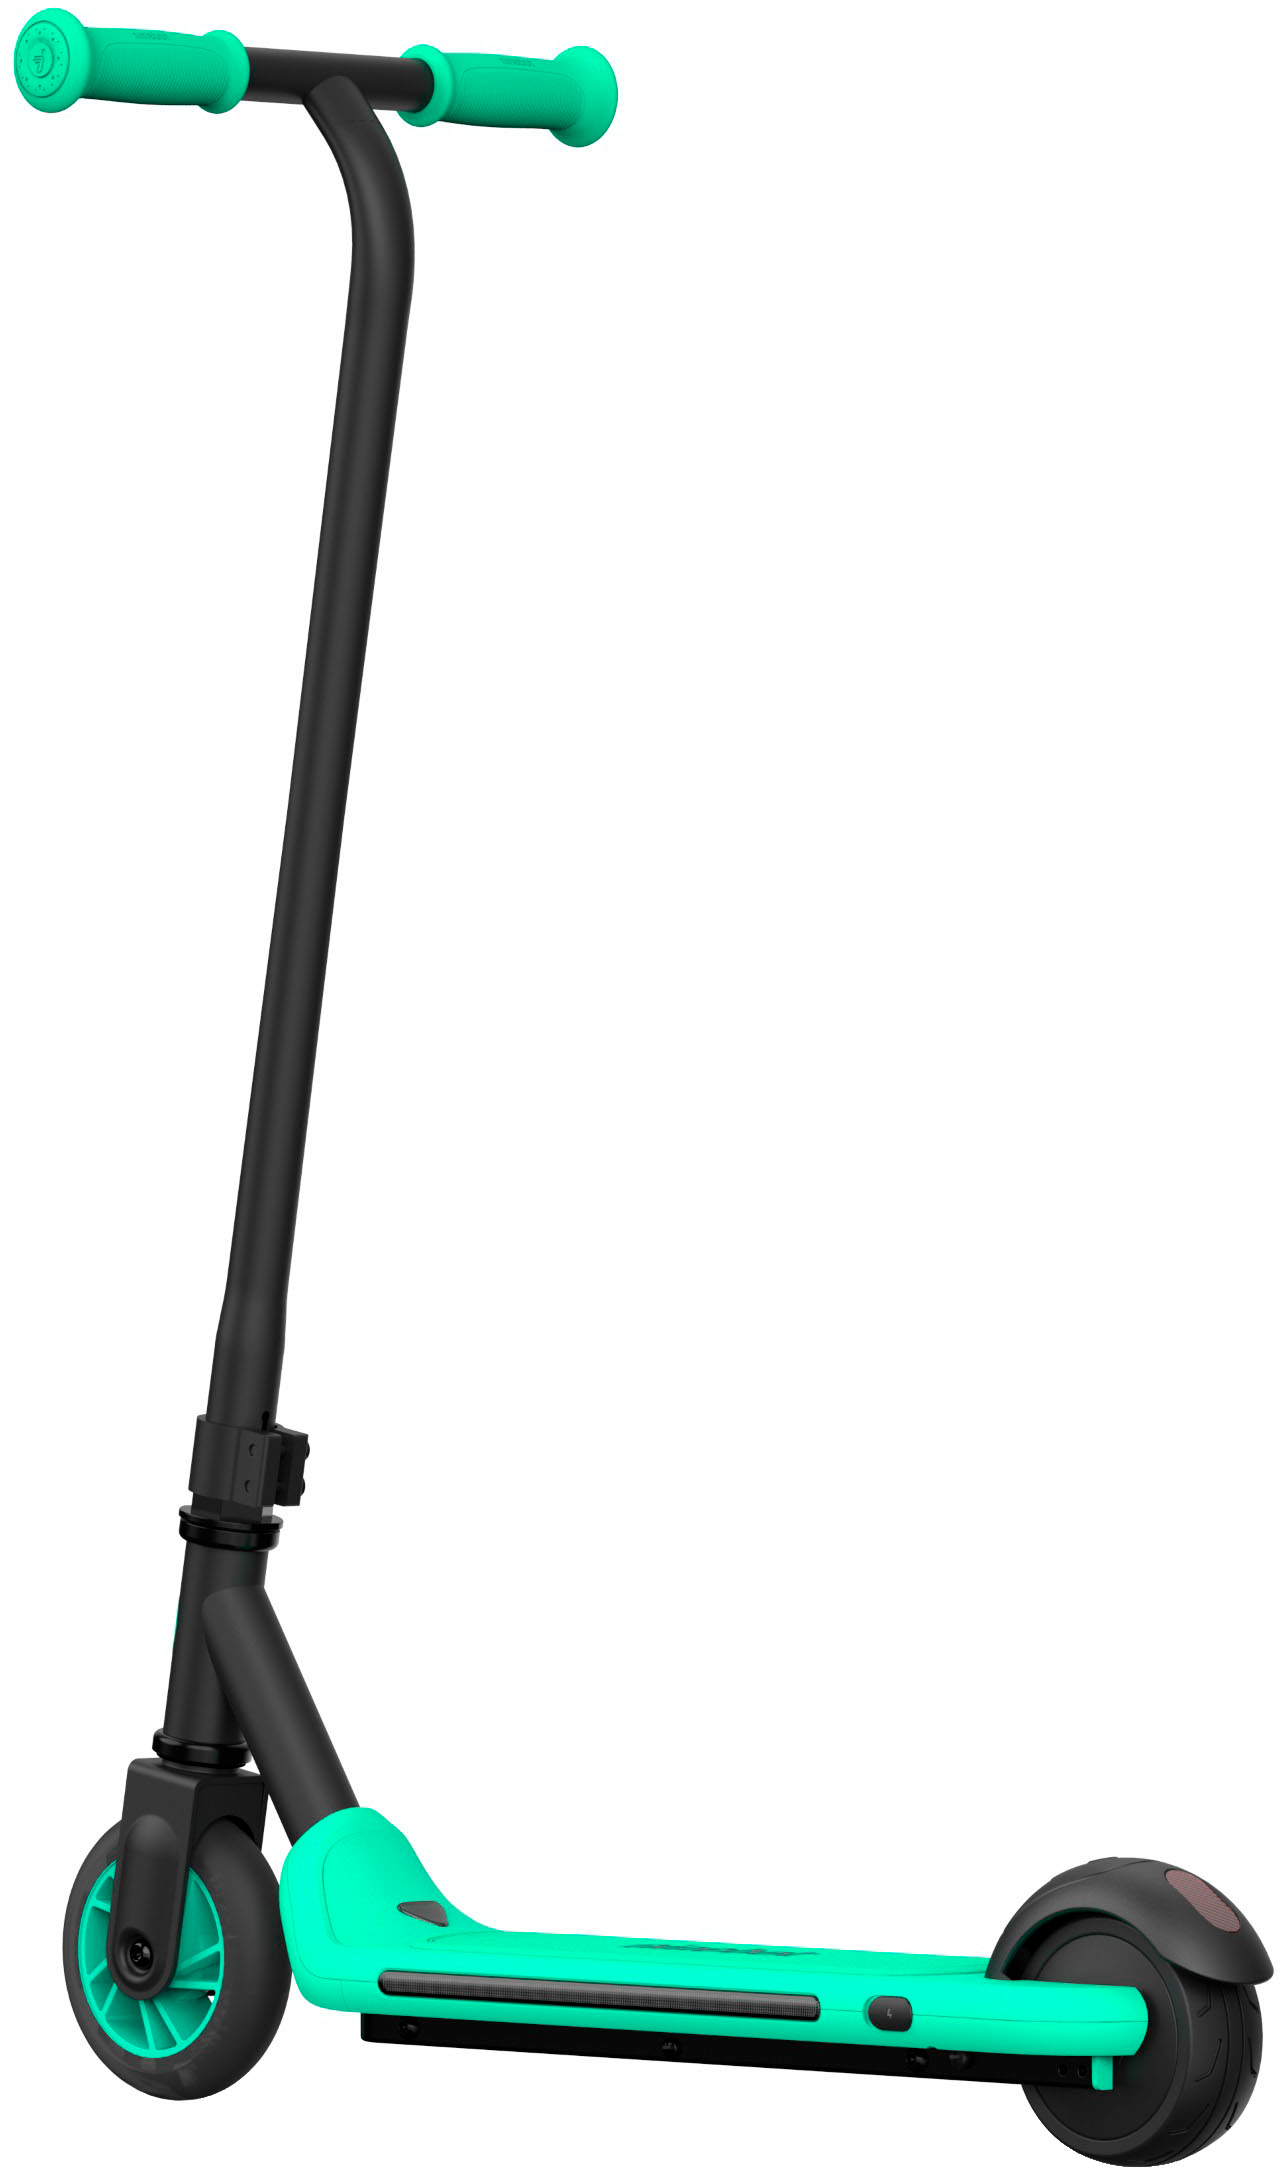 Angle View: Segway - Ninebot A6 Kids Electric Kick Scooter w/ 3 mi Max Operating Range & 7.4 mph Max Speed - Black